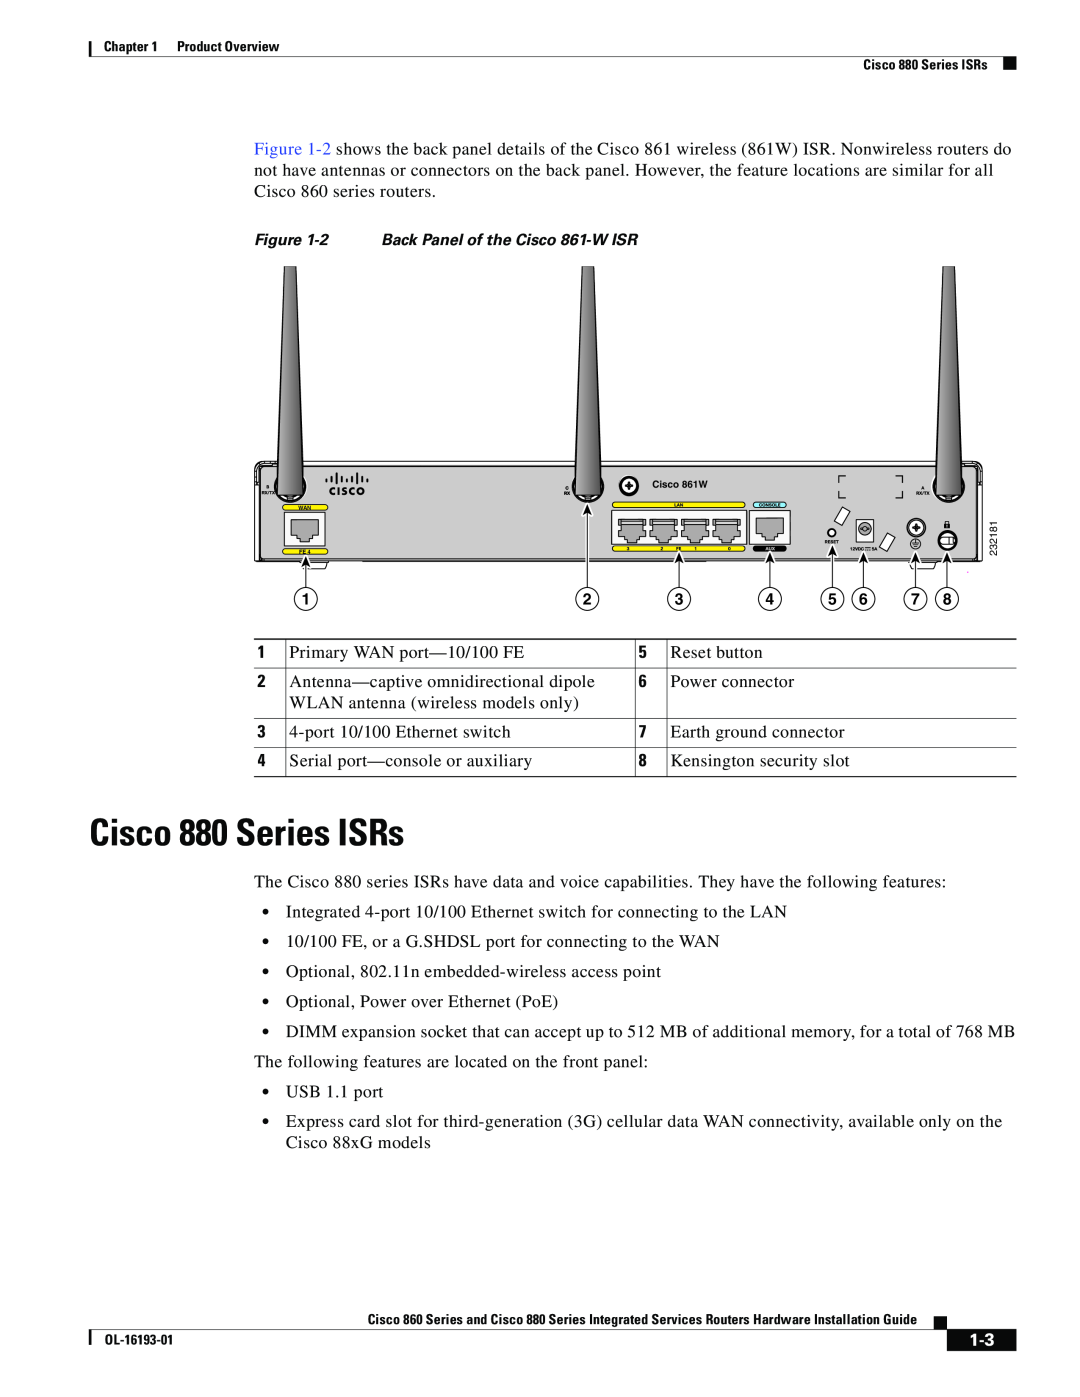 Cisco Systems C892FSPK9, HIG880, 861WGNPK9RF, 860 manual Cisco 880 Series ISRs 